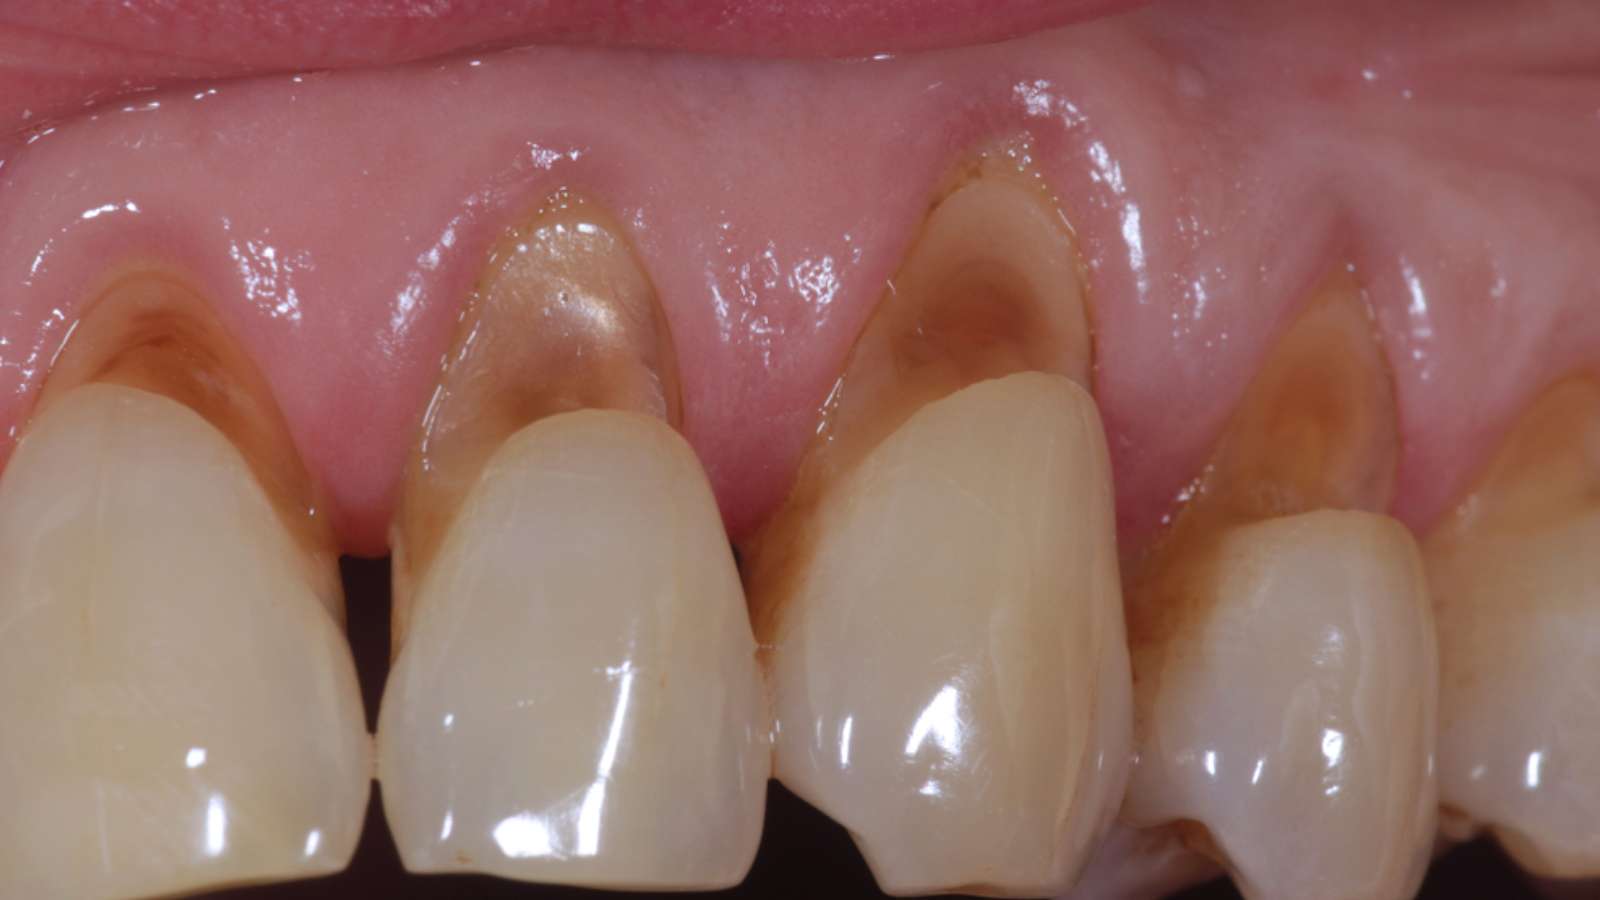 types of cavities - class 5 cavity